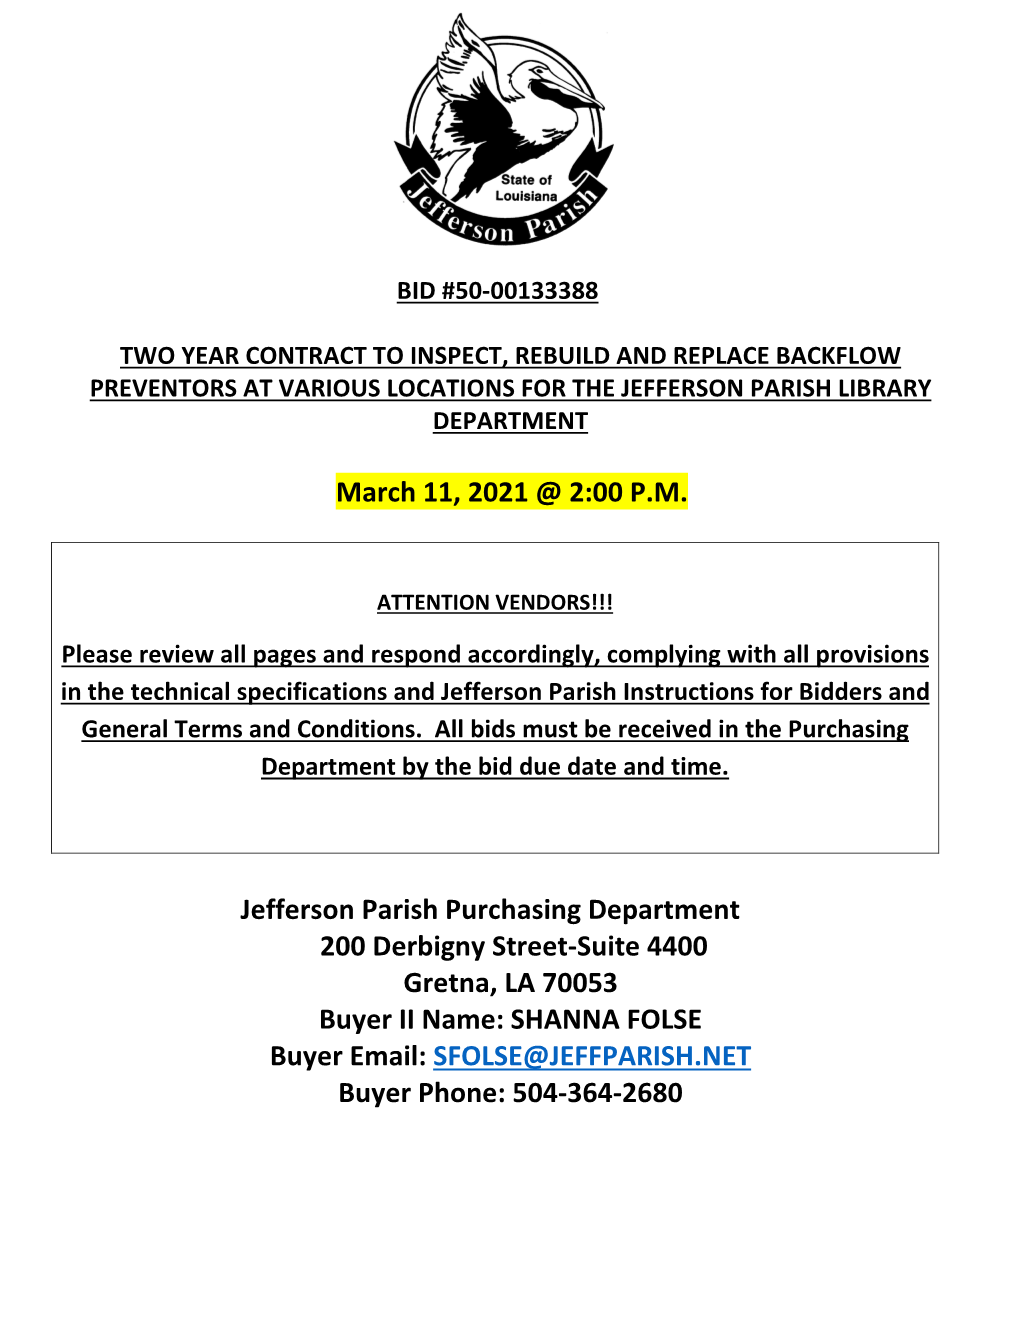 March 11, 2021 @ 2:00 P.M. Jefferson Parish Purchasing Department 200